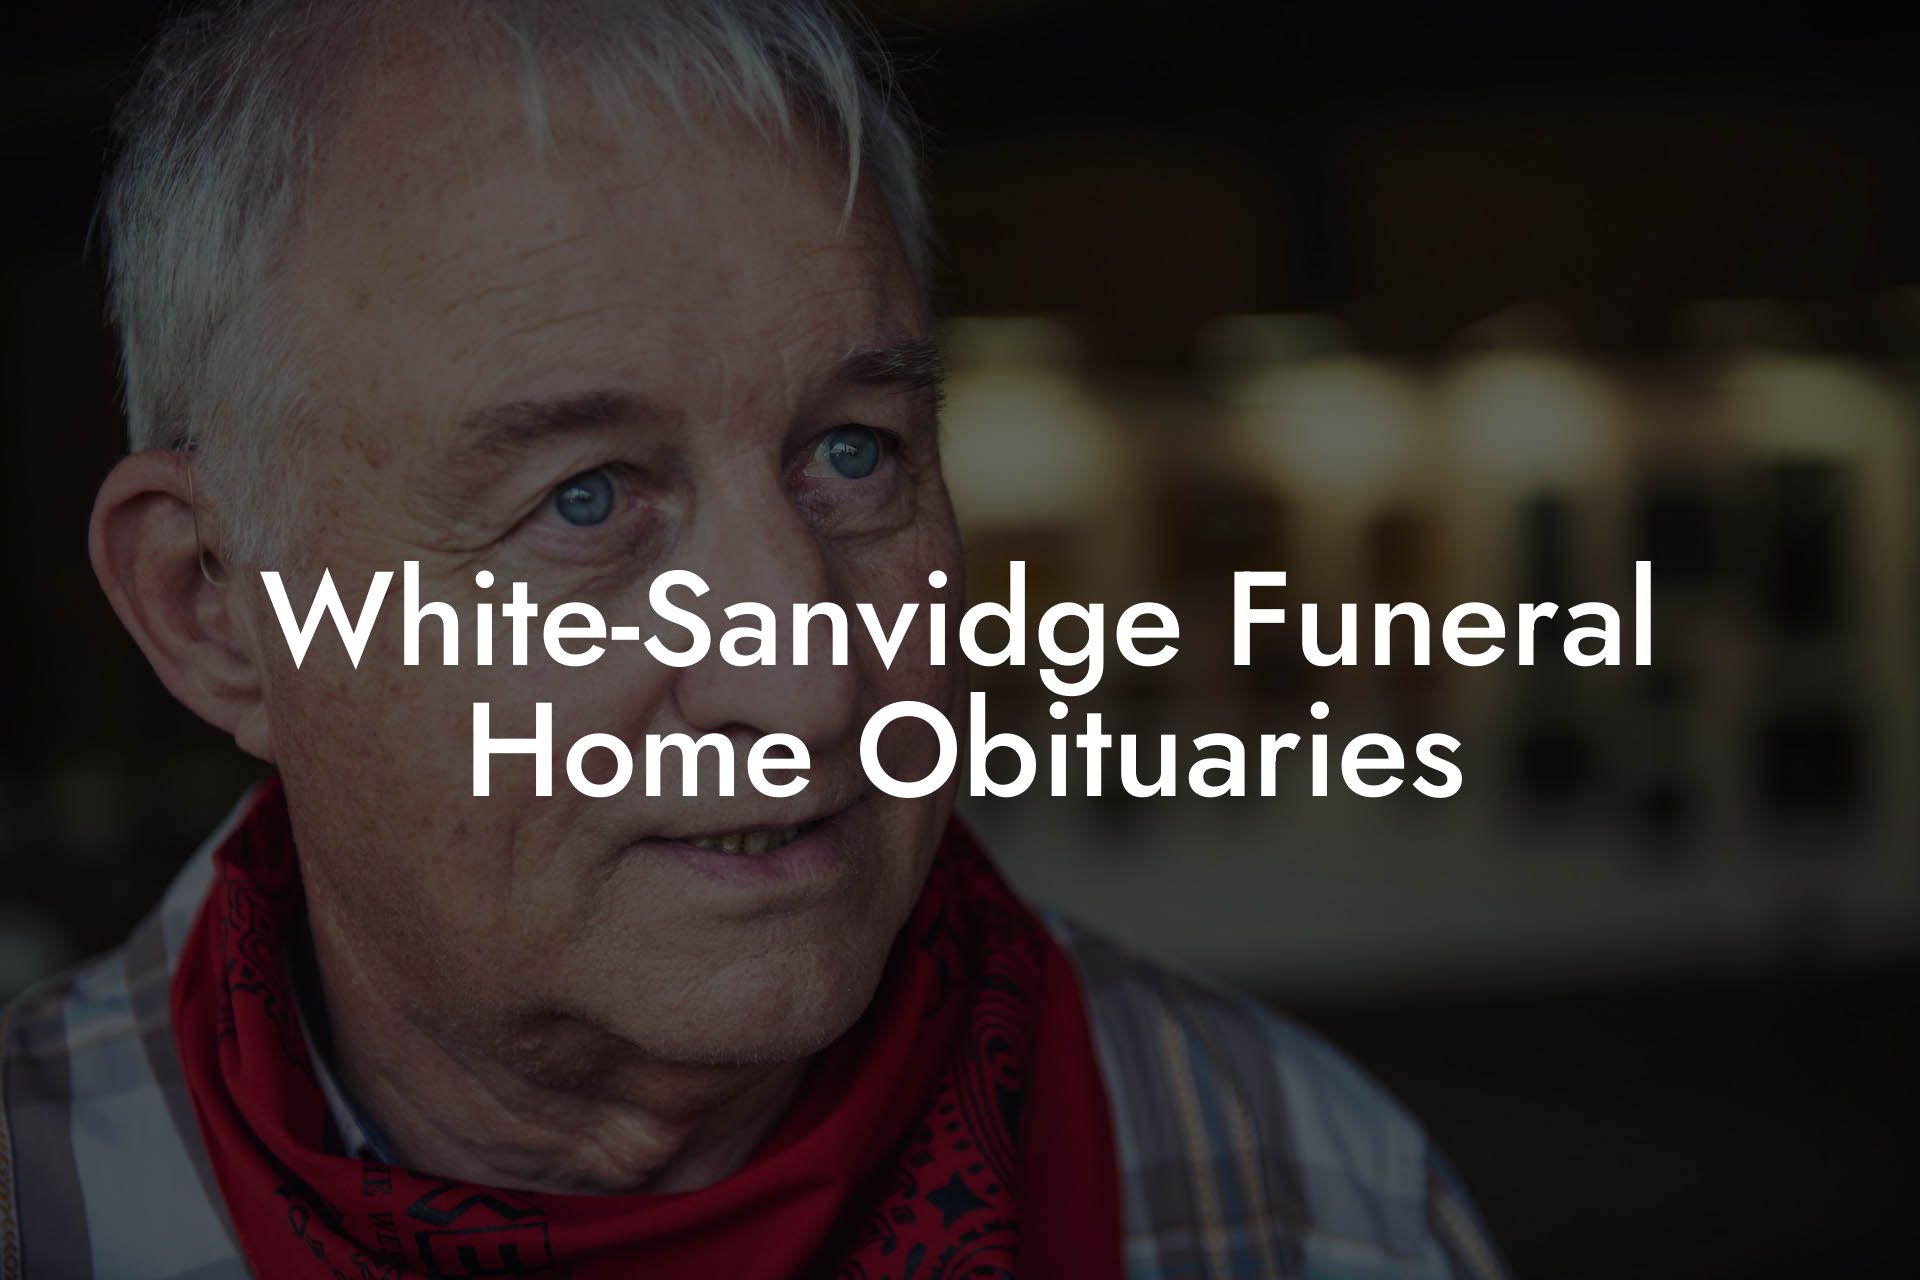 White-Sanvidge Funeral Home Obituaries